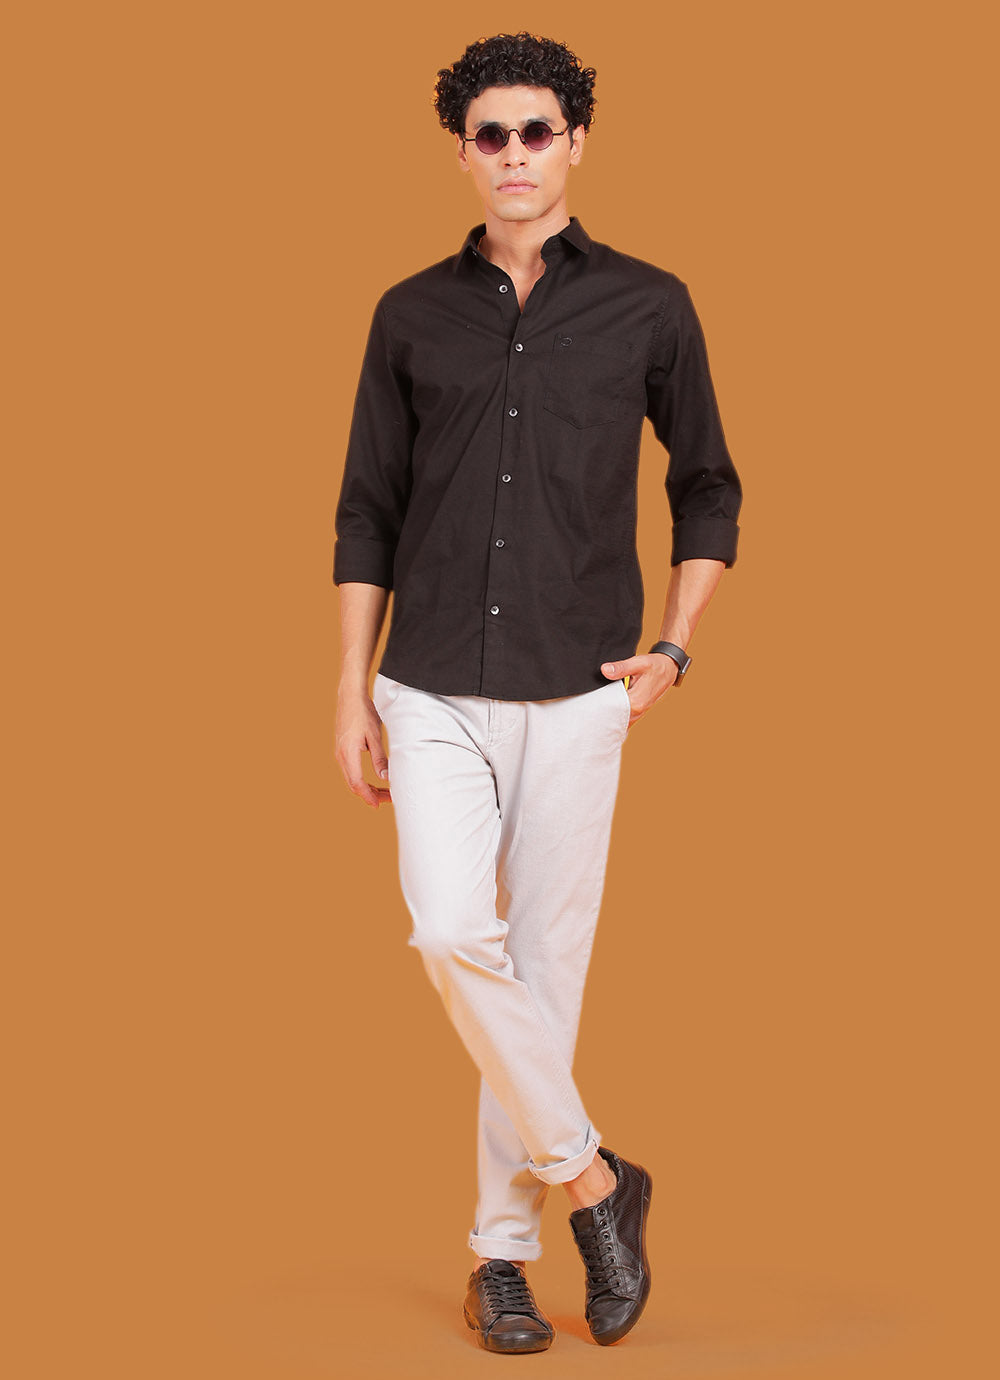 Black Cotton Blend Slim Fit Party Wear Shirt with Patch Pocket